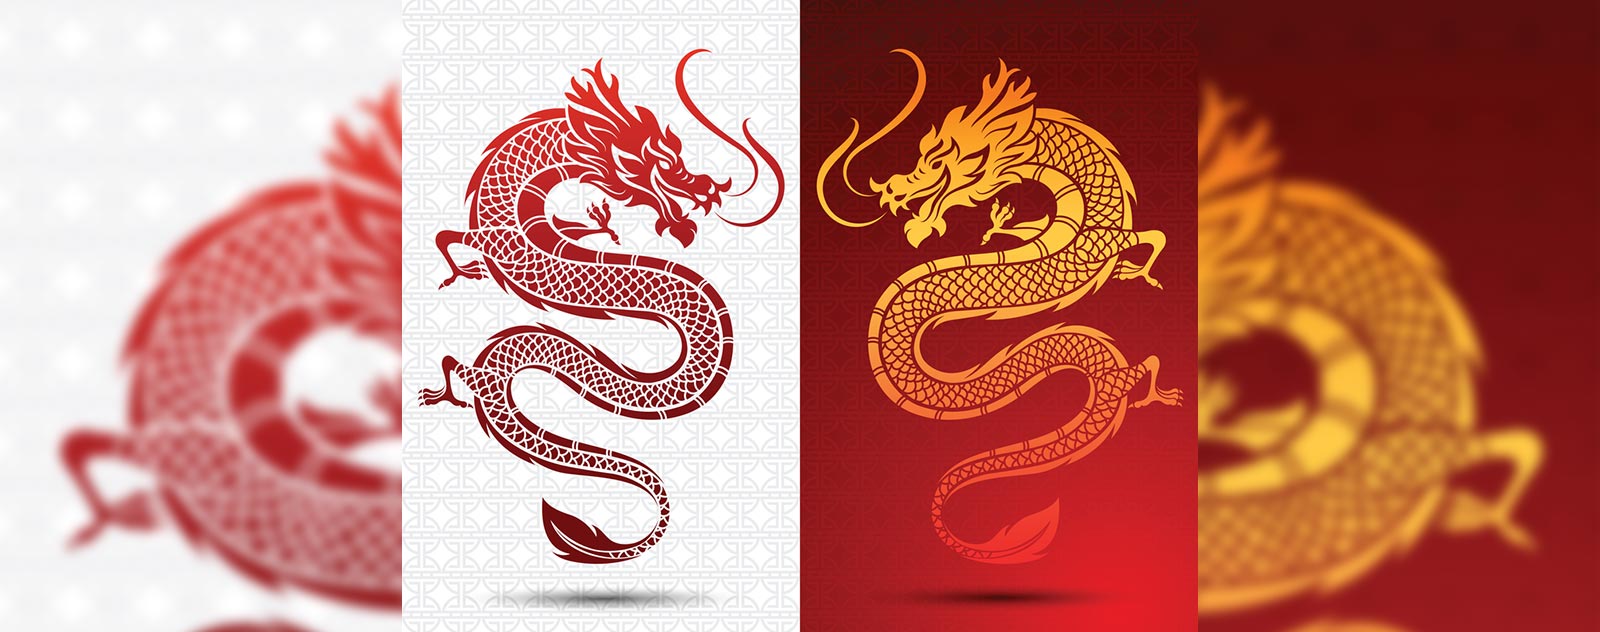 dragon-logo-images-hd